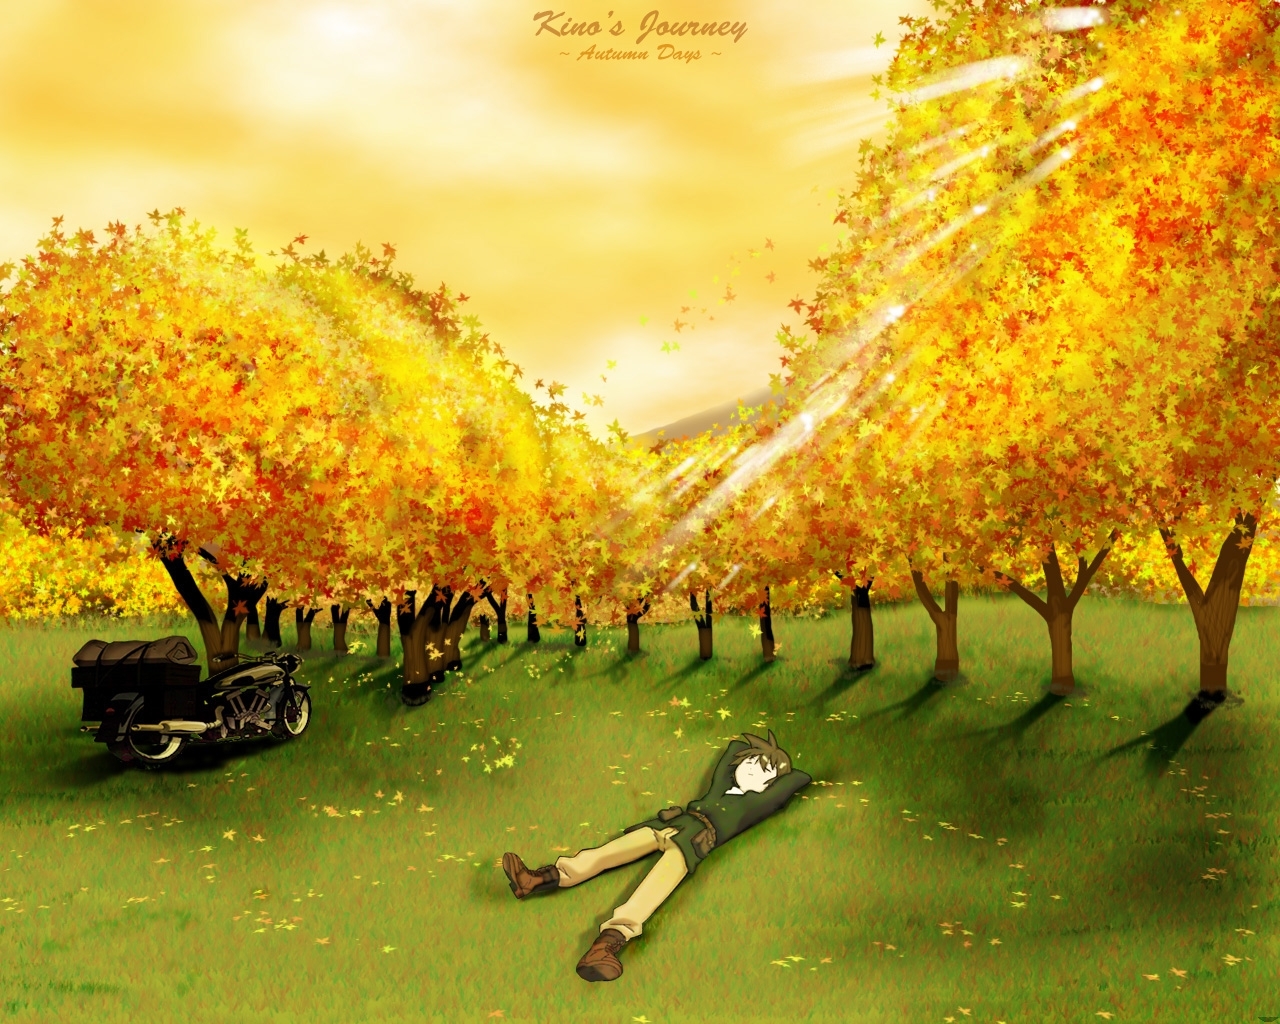 Free Autumn Anime Wallpaper by xThelittleRose on DeviantArt